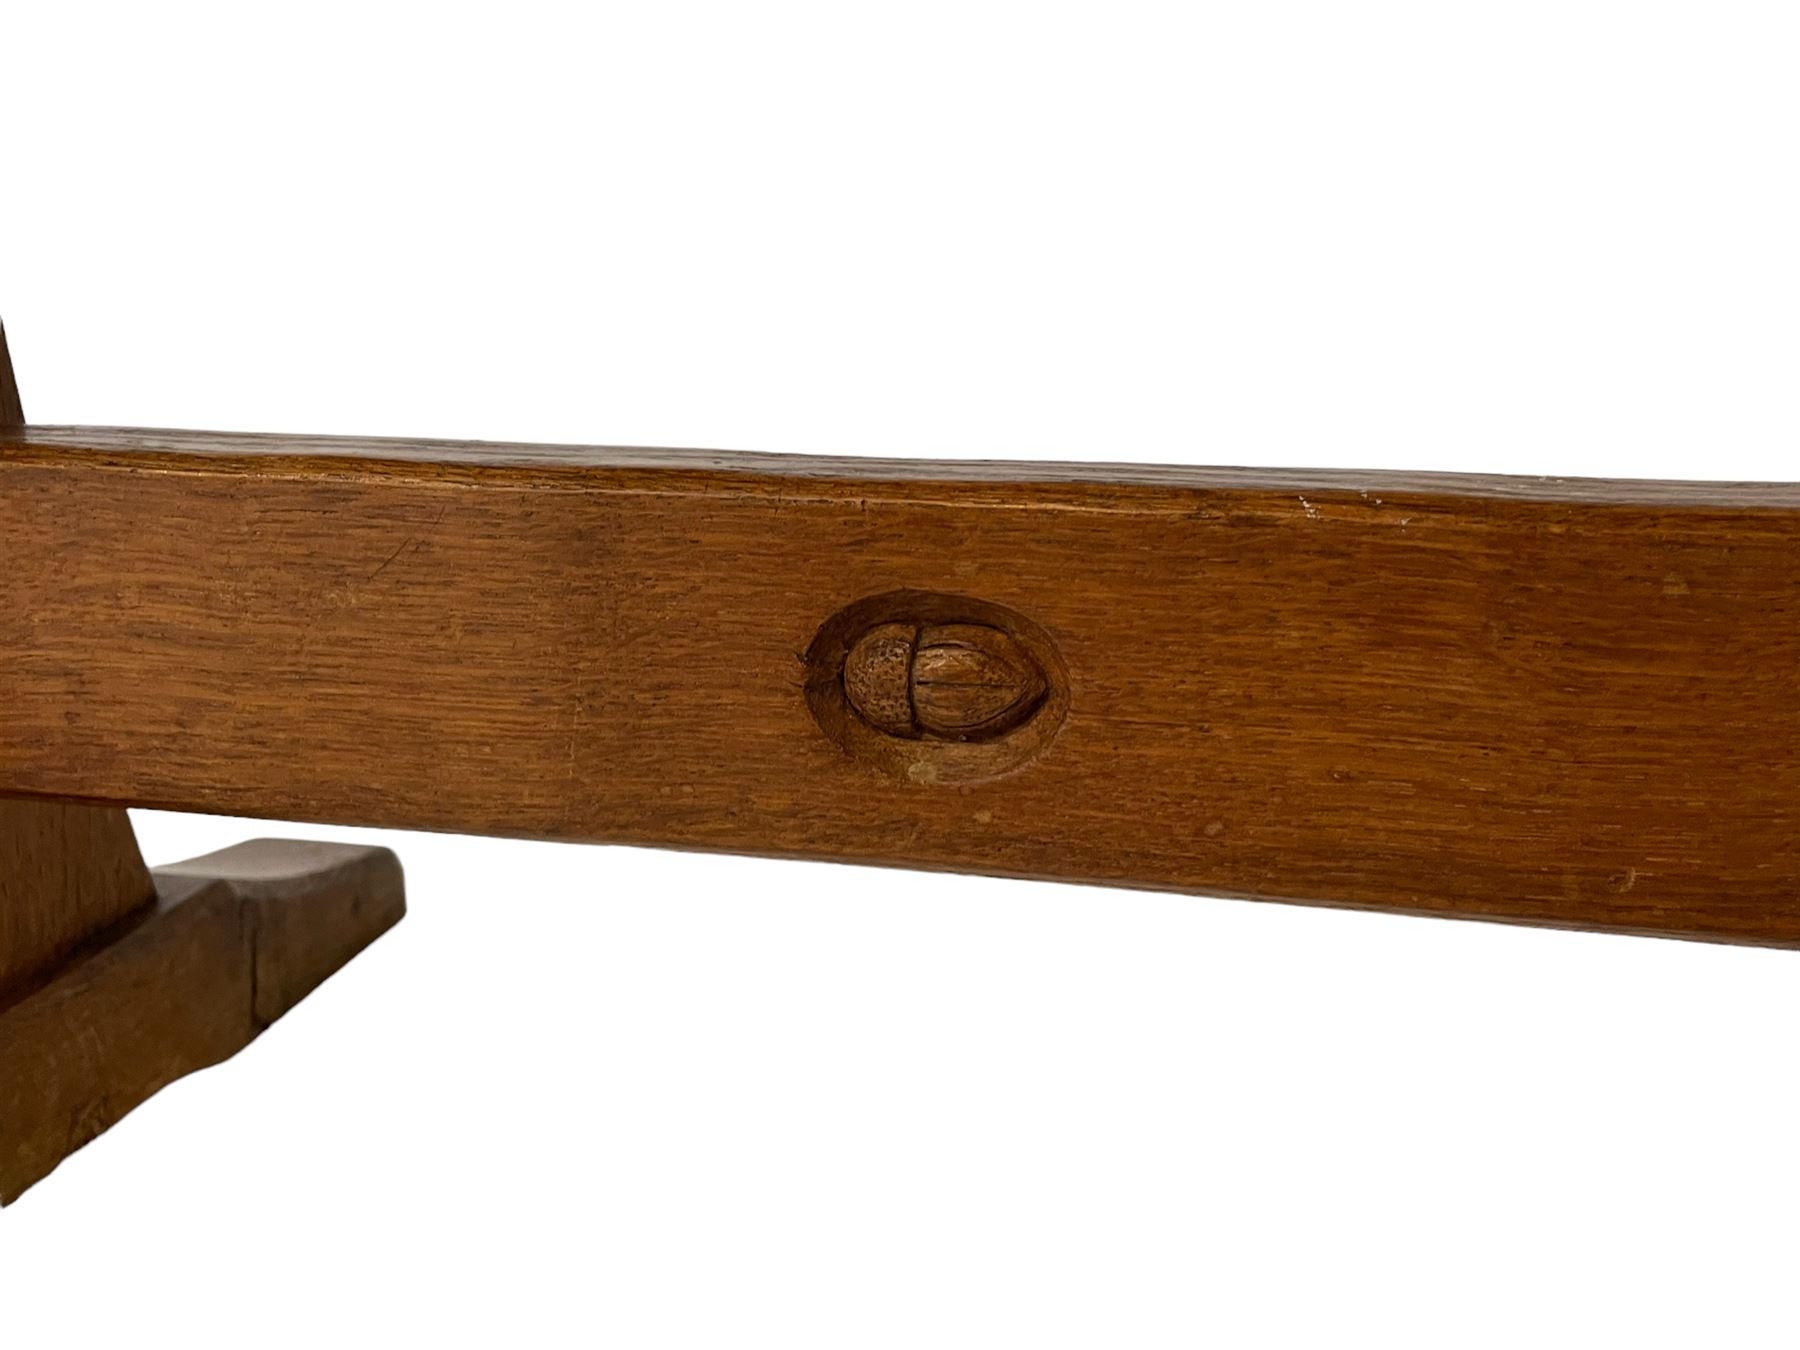 Acornman - rectangular adzed oak coffee table - Image 4 of 8